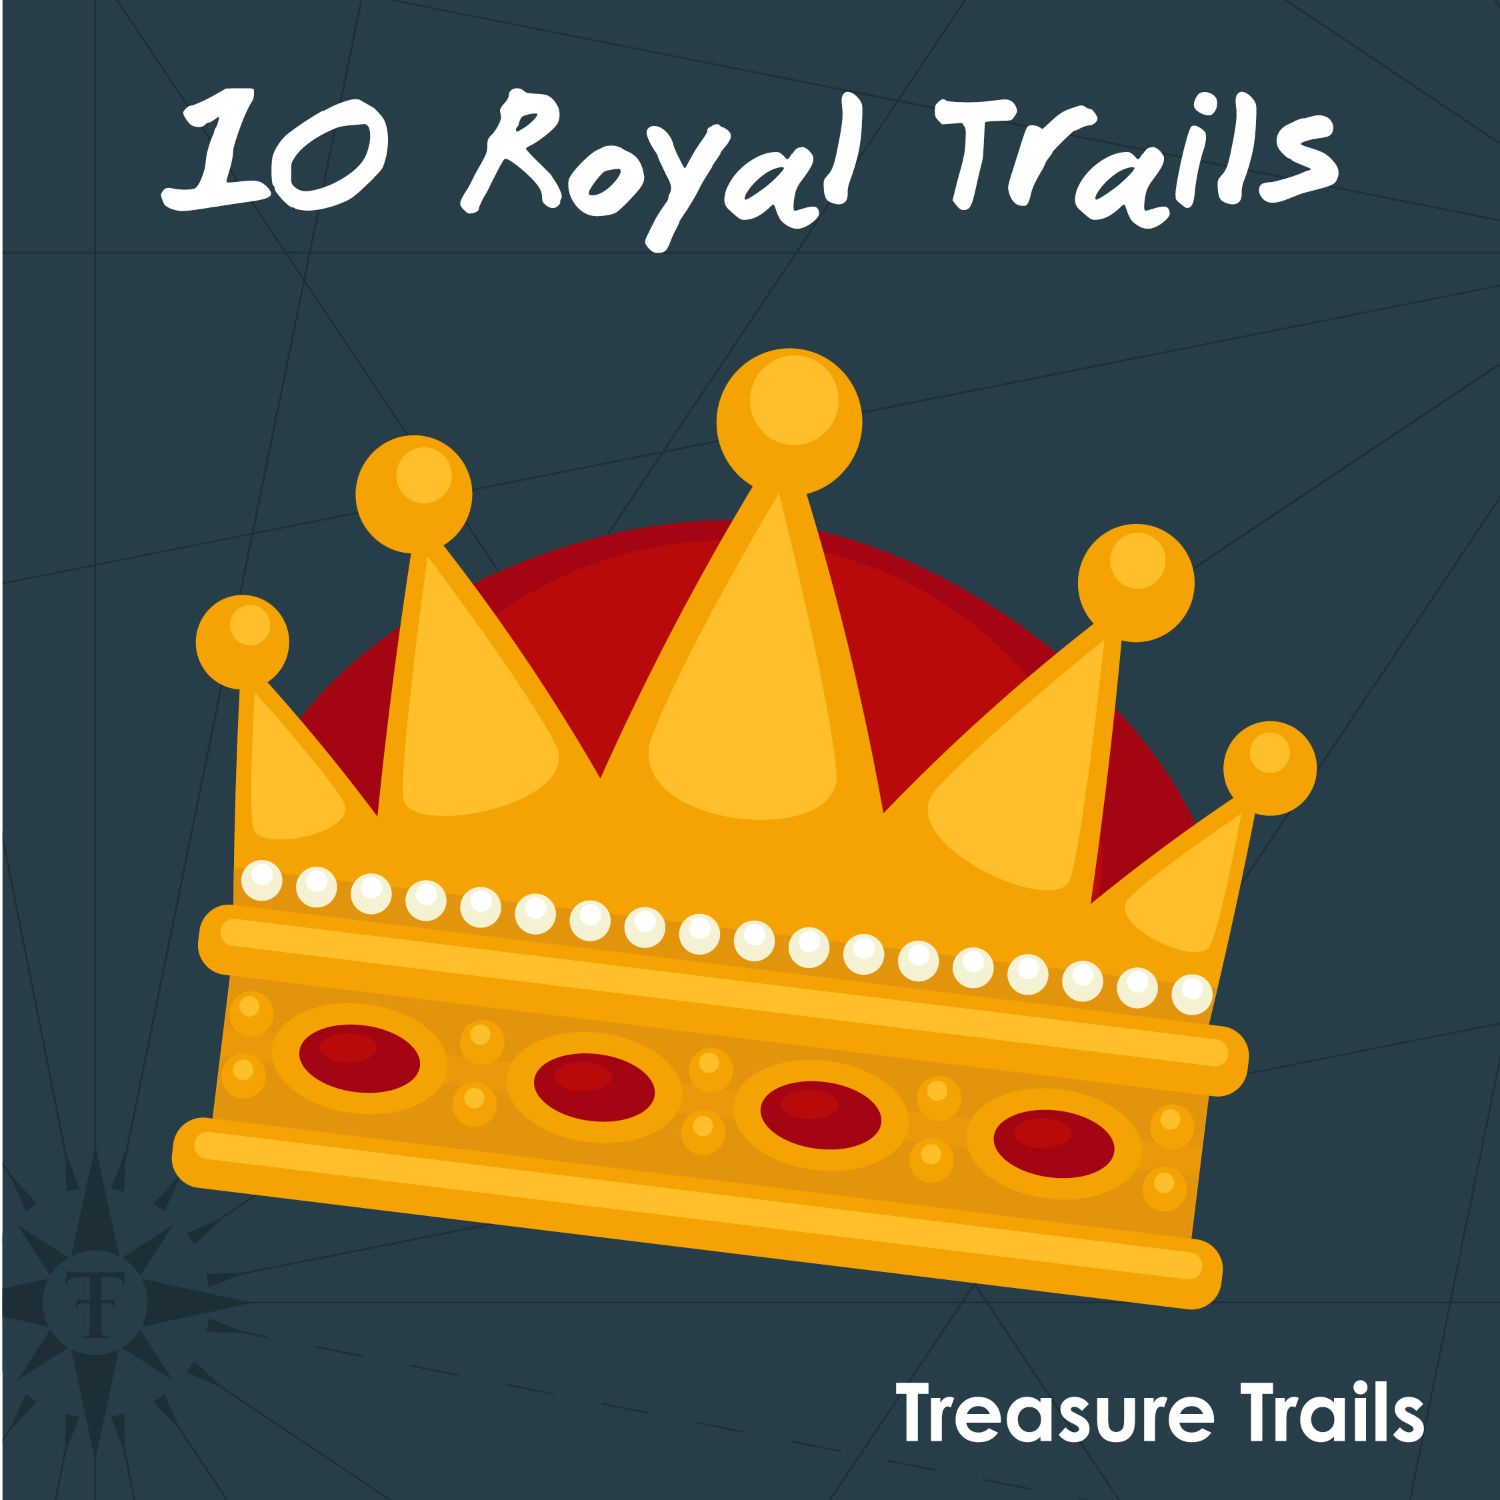 IMAGE: 10 Royal Trails